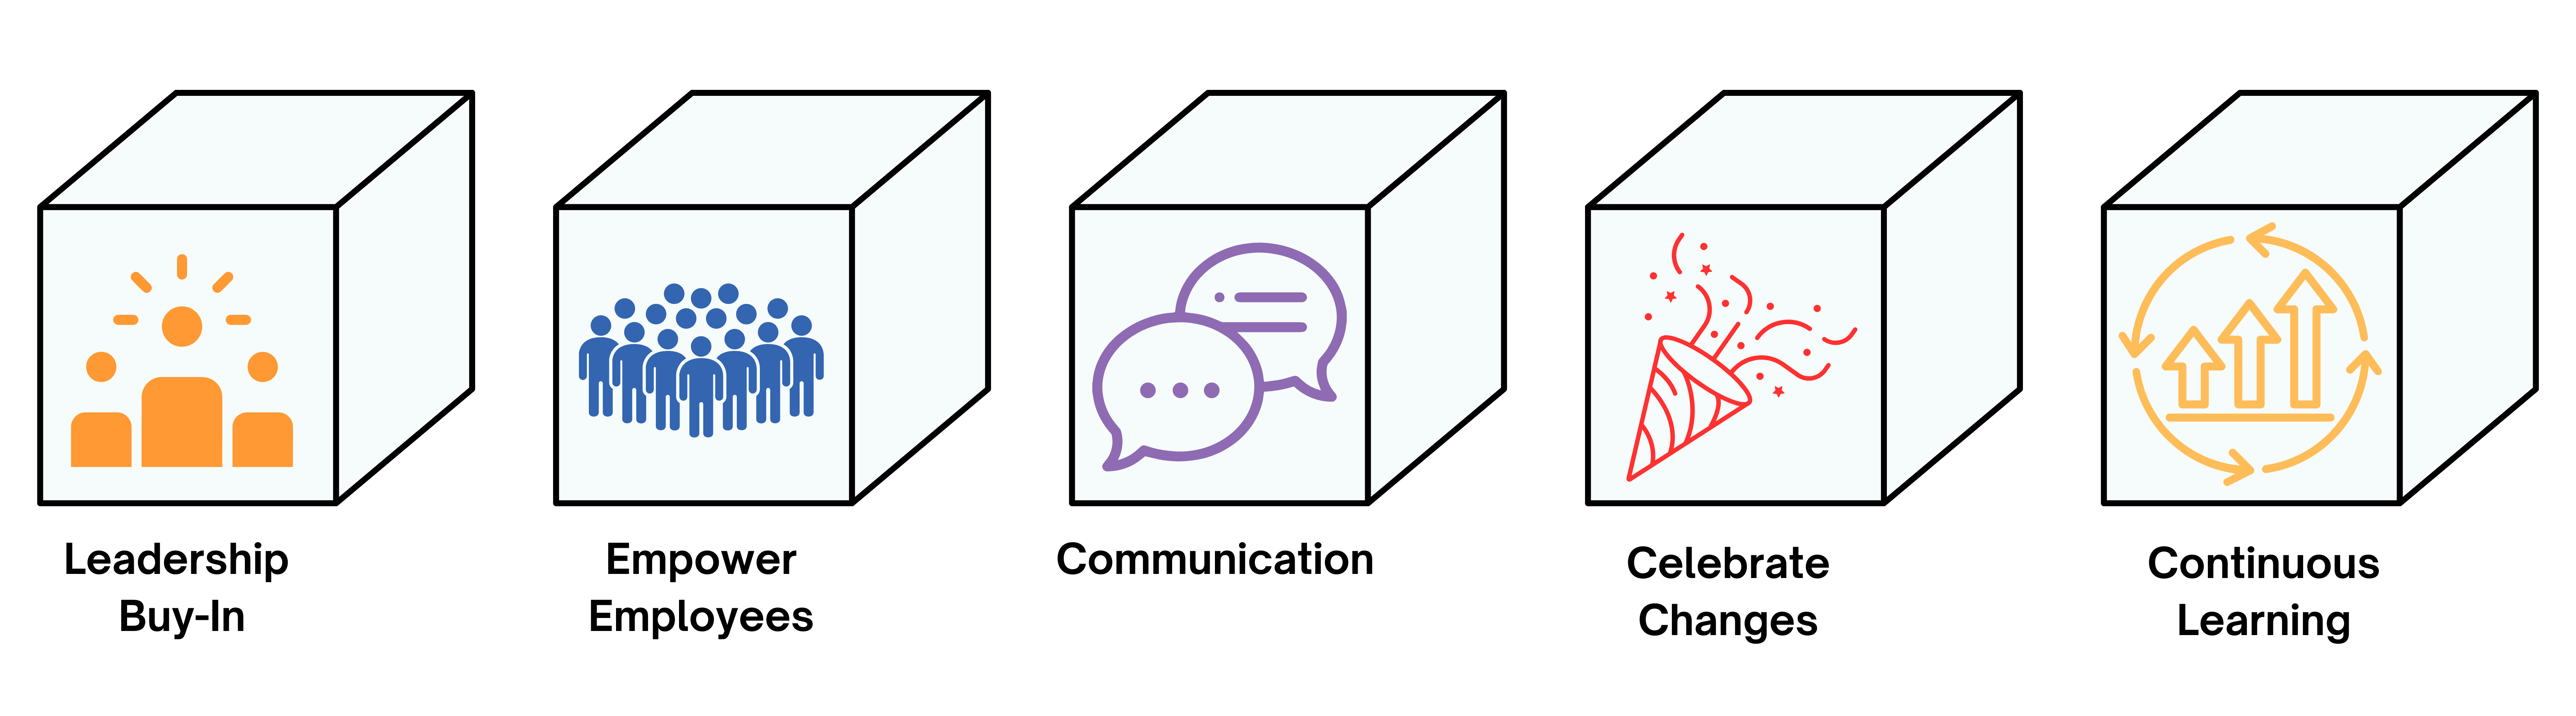 Building blocks to feedback-friendly business